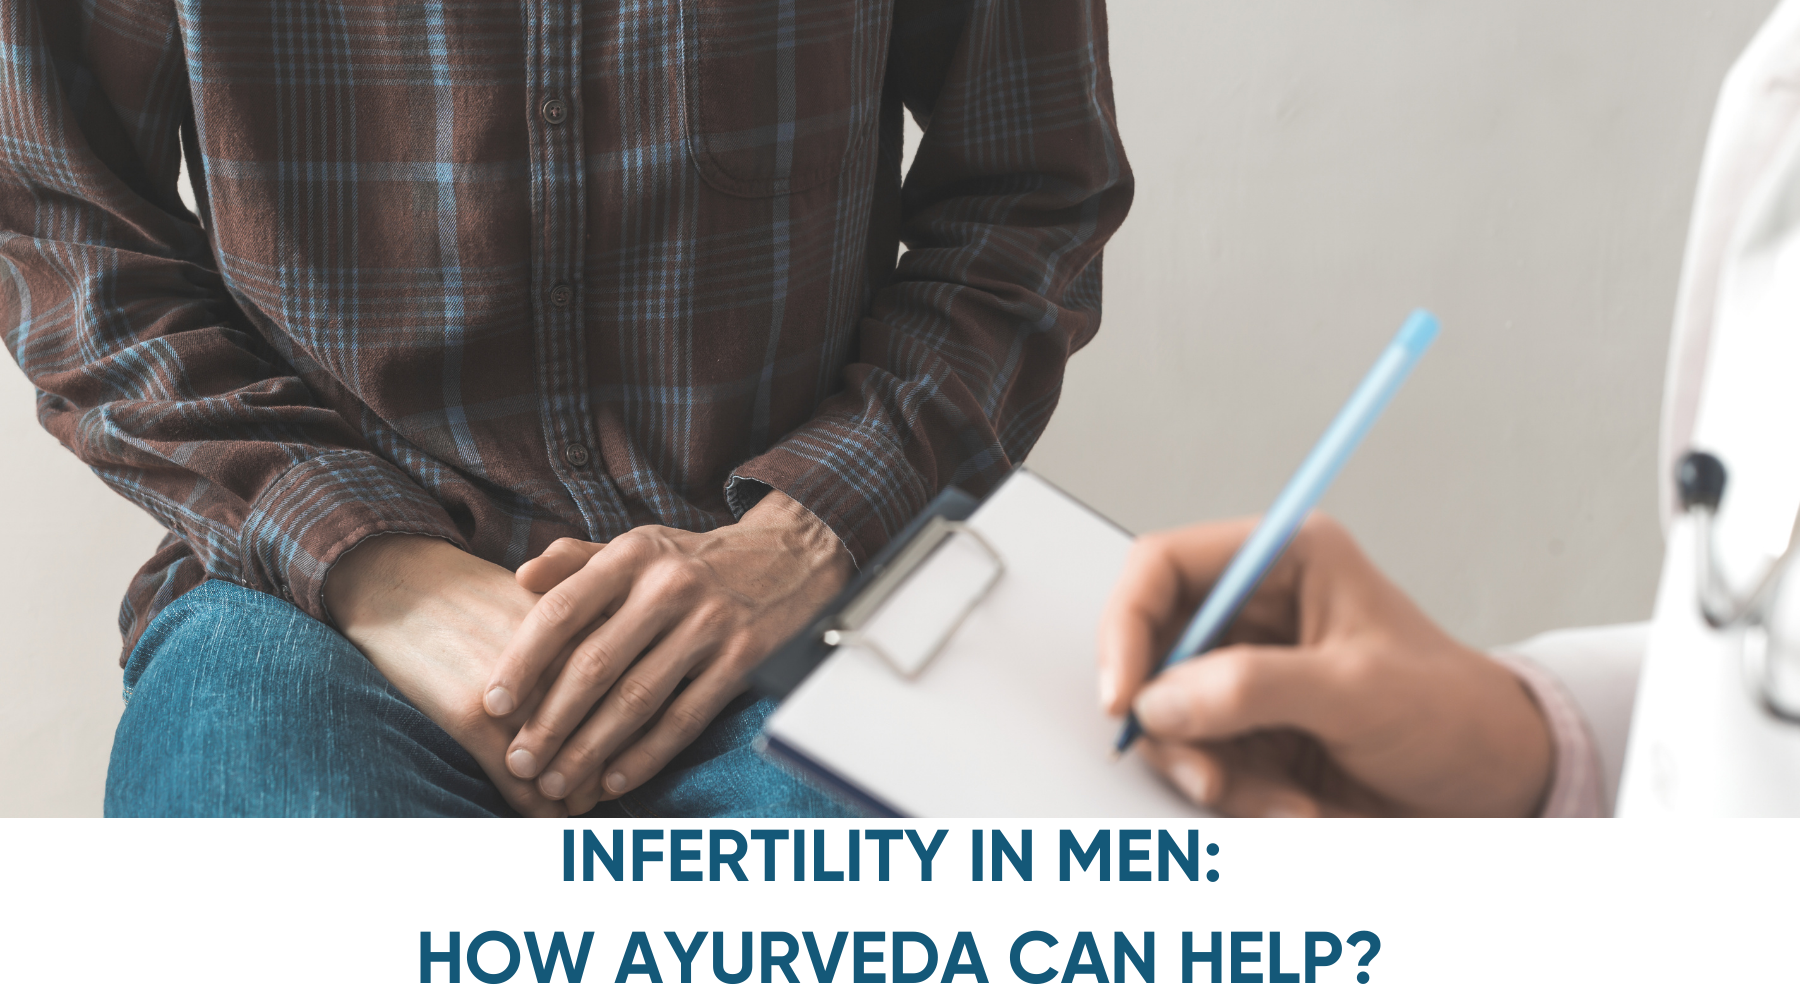 INFERTILITY IN MEN: HOW AYURVEDA CAN HELP?